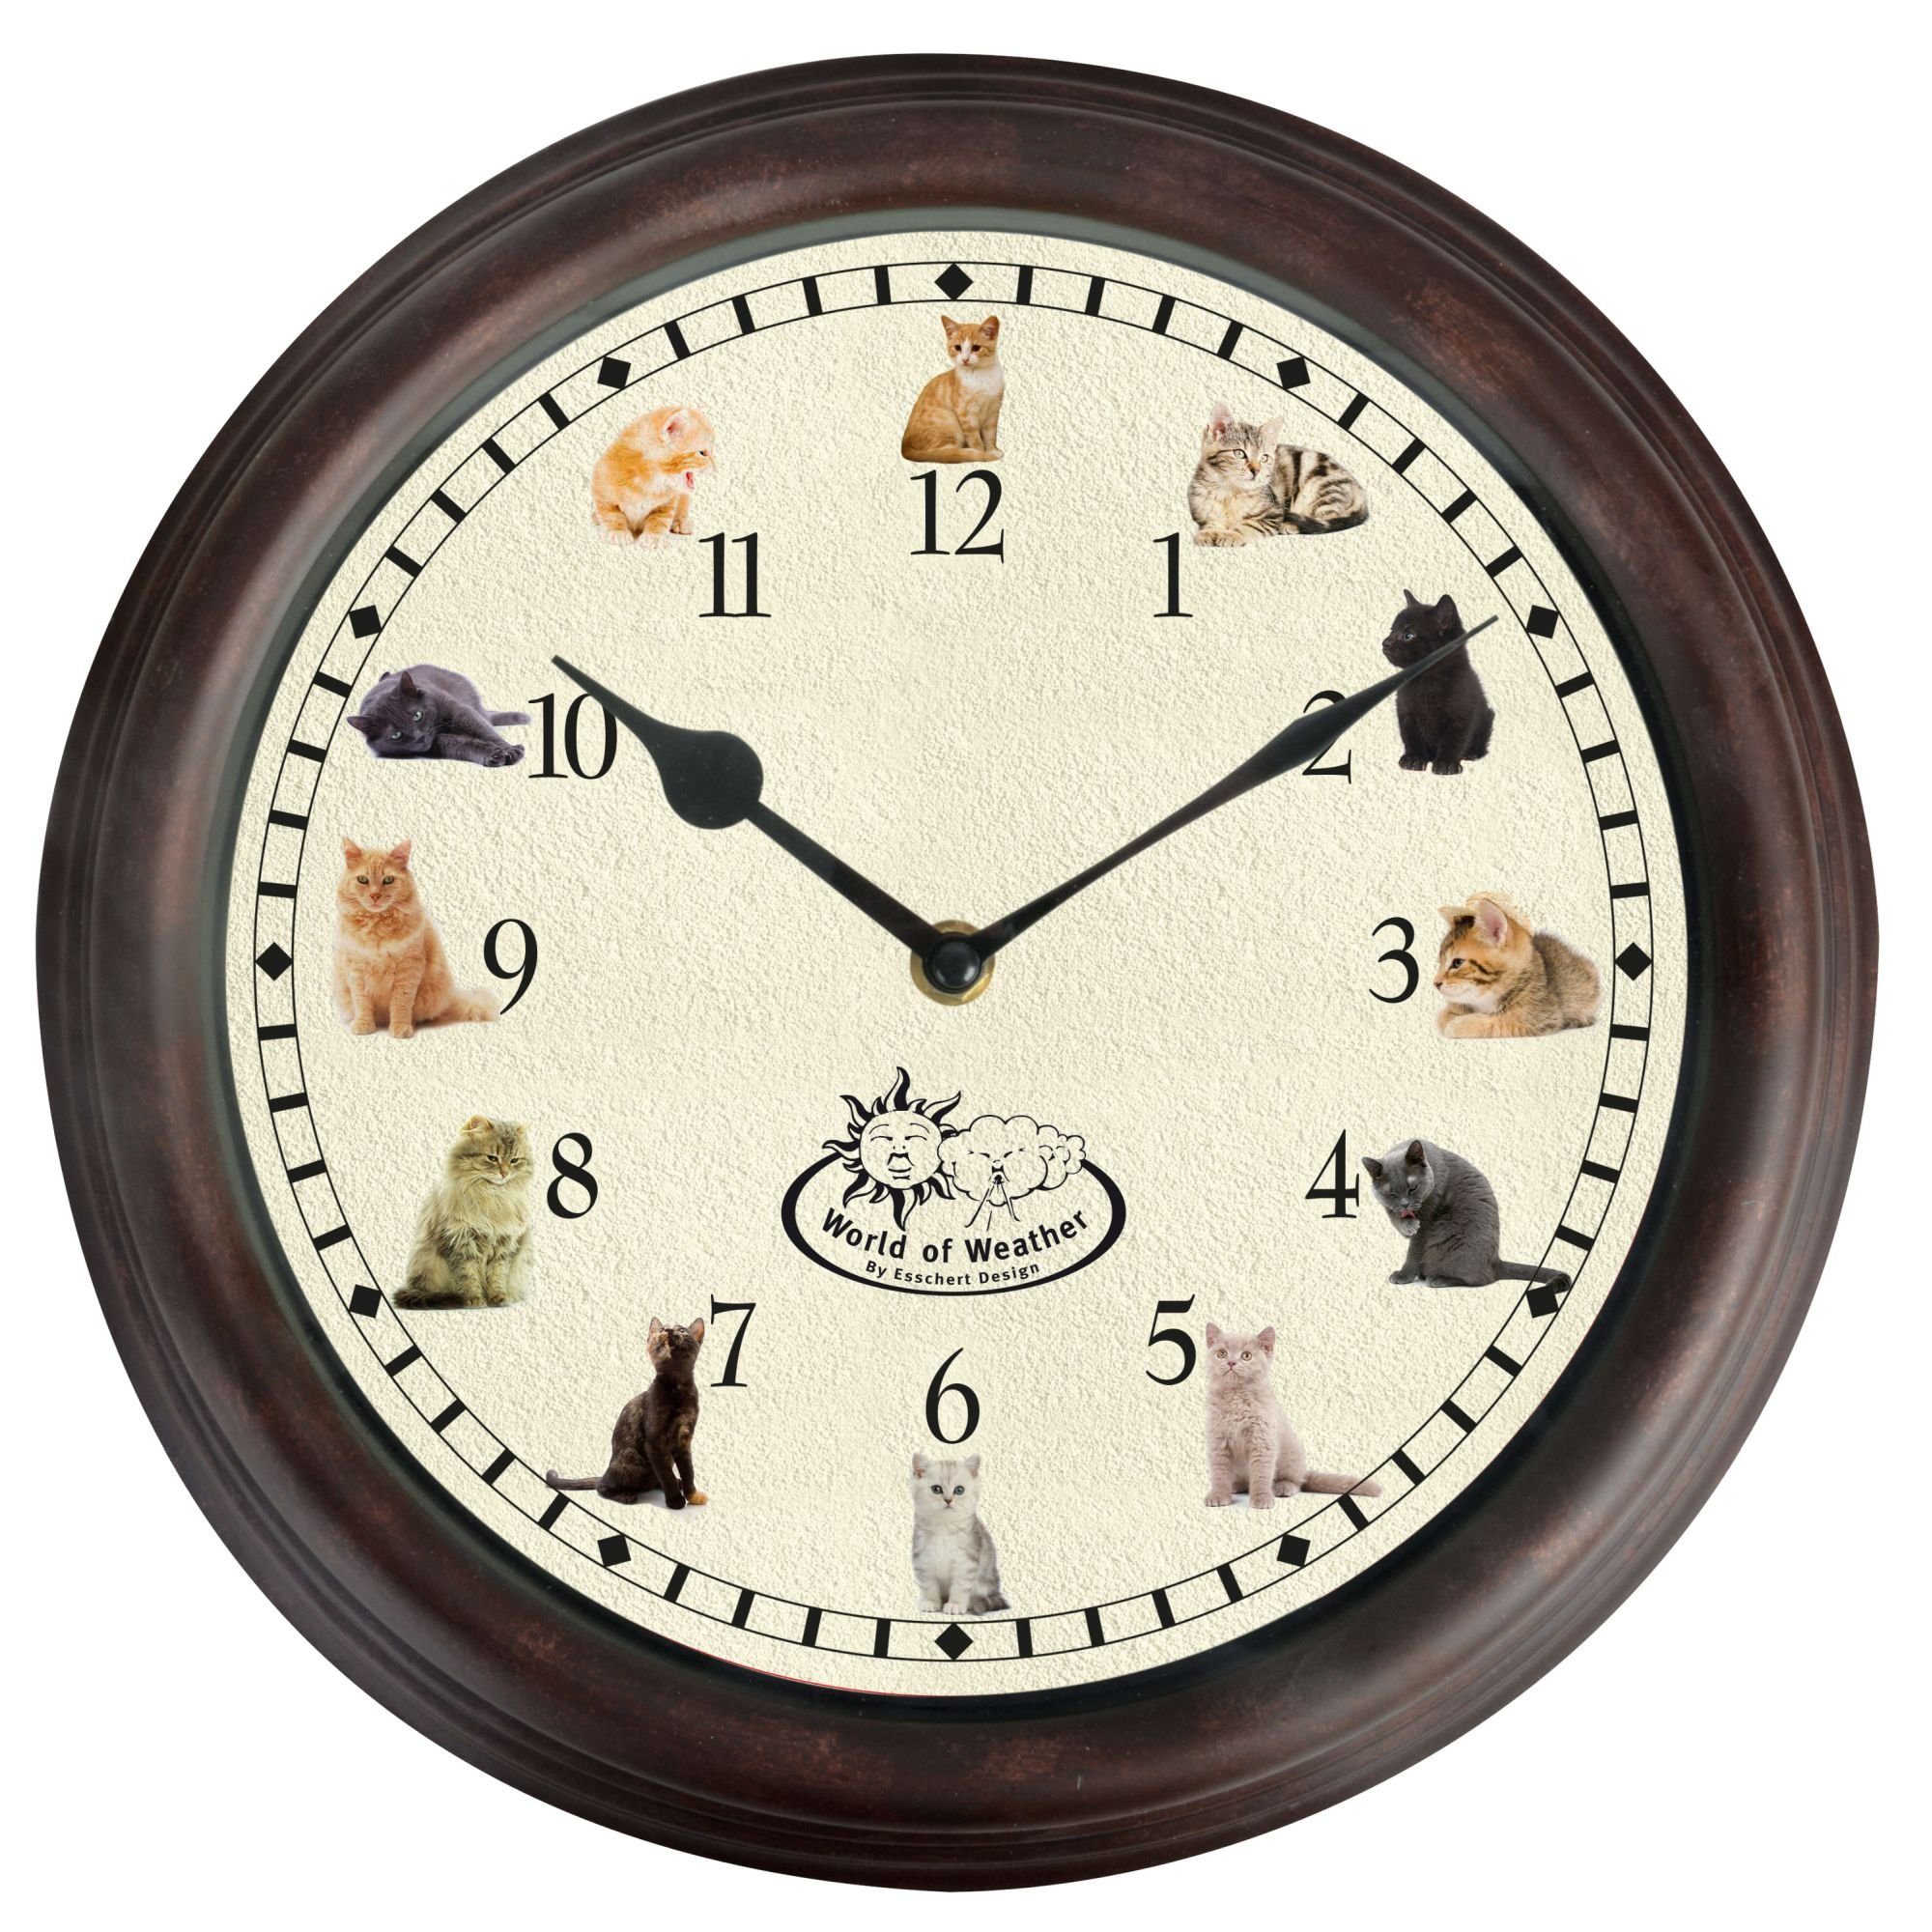 Rivanto Wanduhr (Uhr mit Katzengeräuchenn, Durchmesser 30 cm)